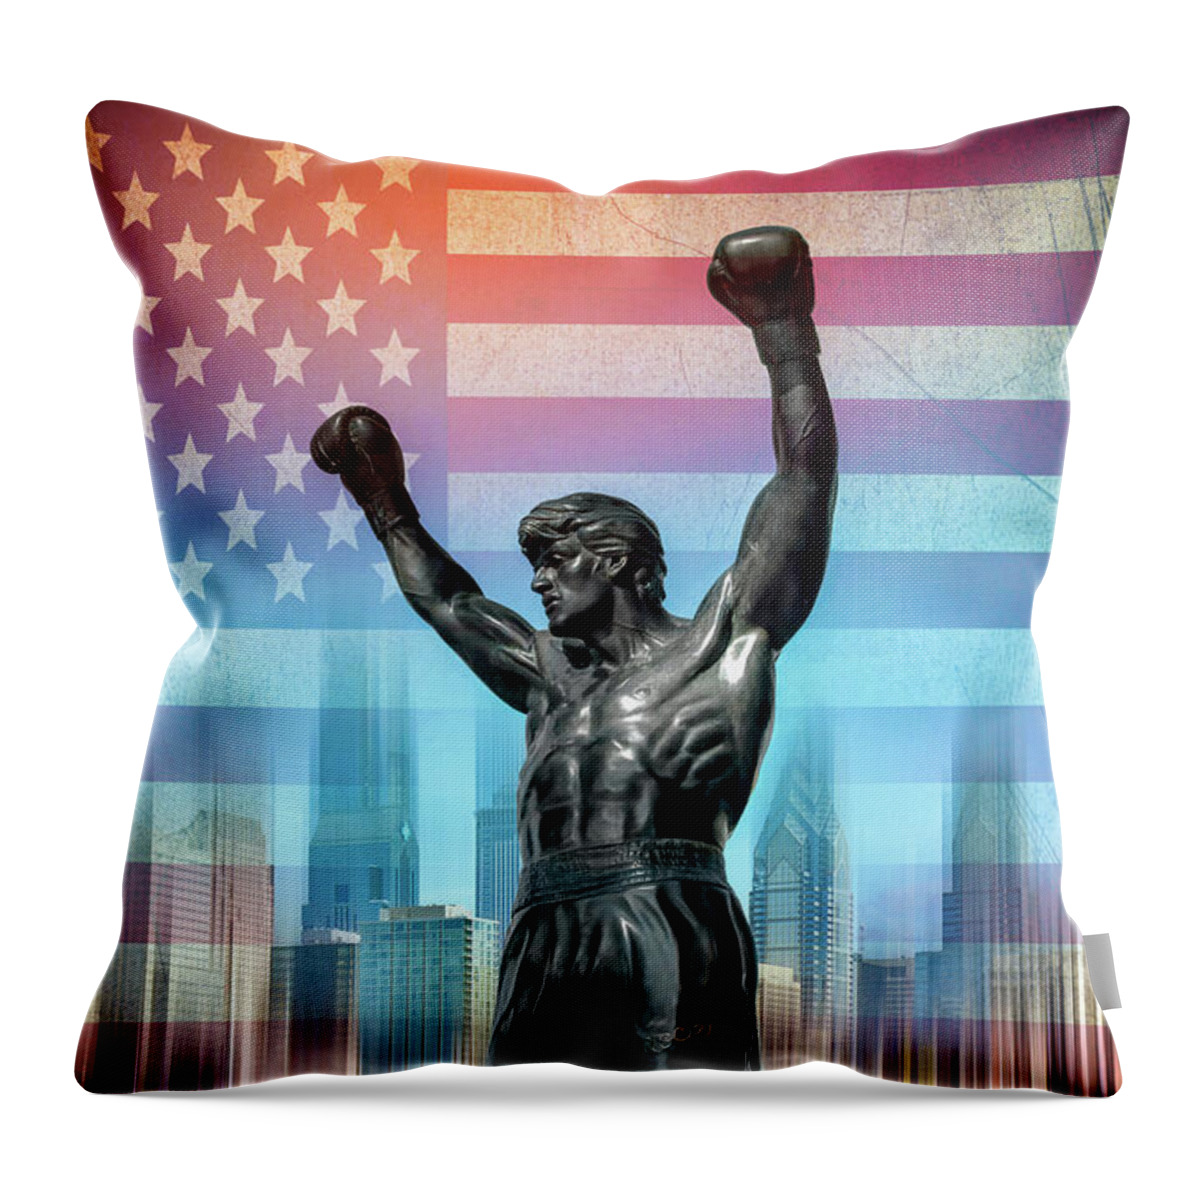 Philadelphia Throw Pillow featuring the photograph Rocky Philadelphia by Carol Japp